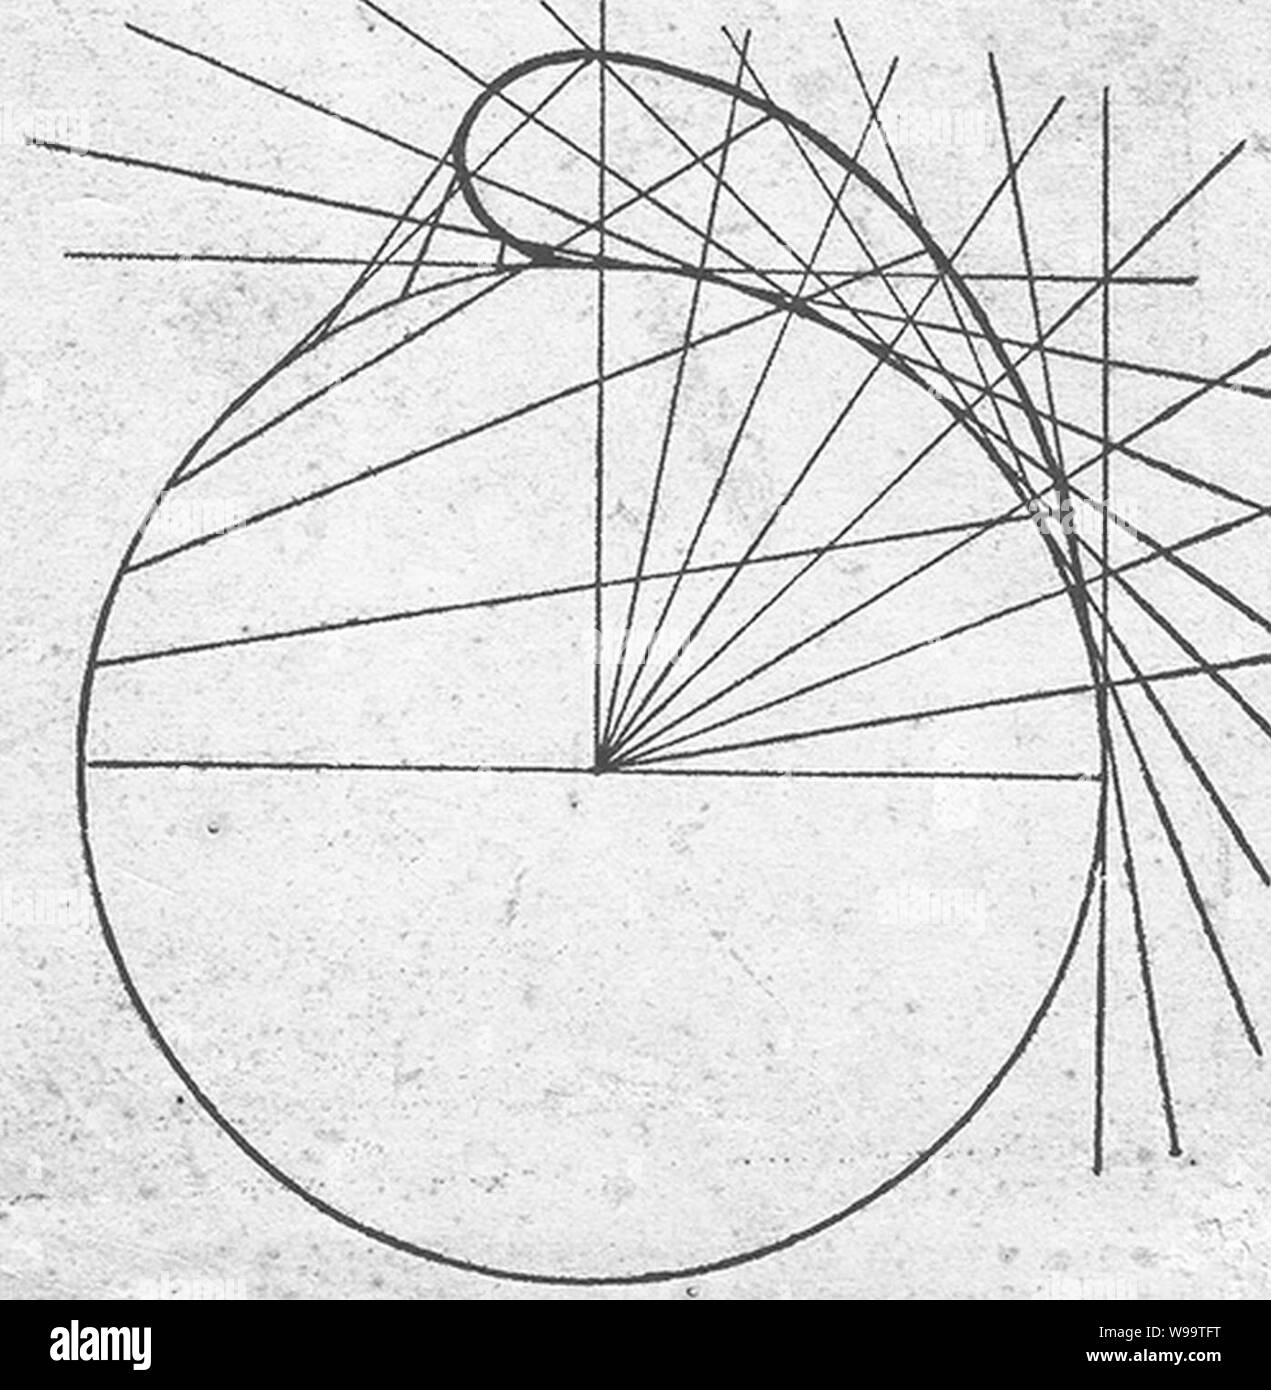 Dibujo simplificado de la Curva matemática Cornoide. Stock Photo